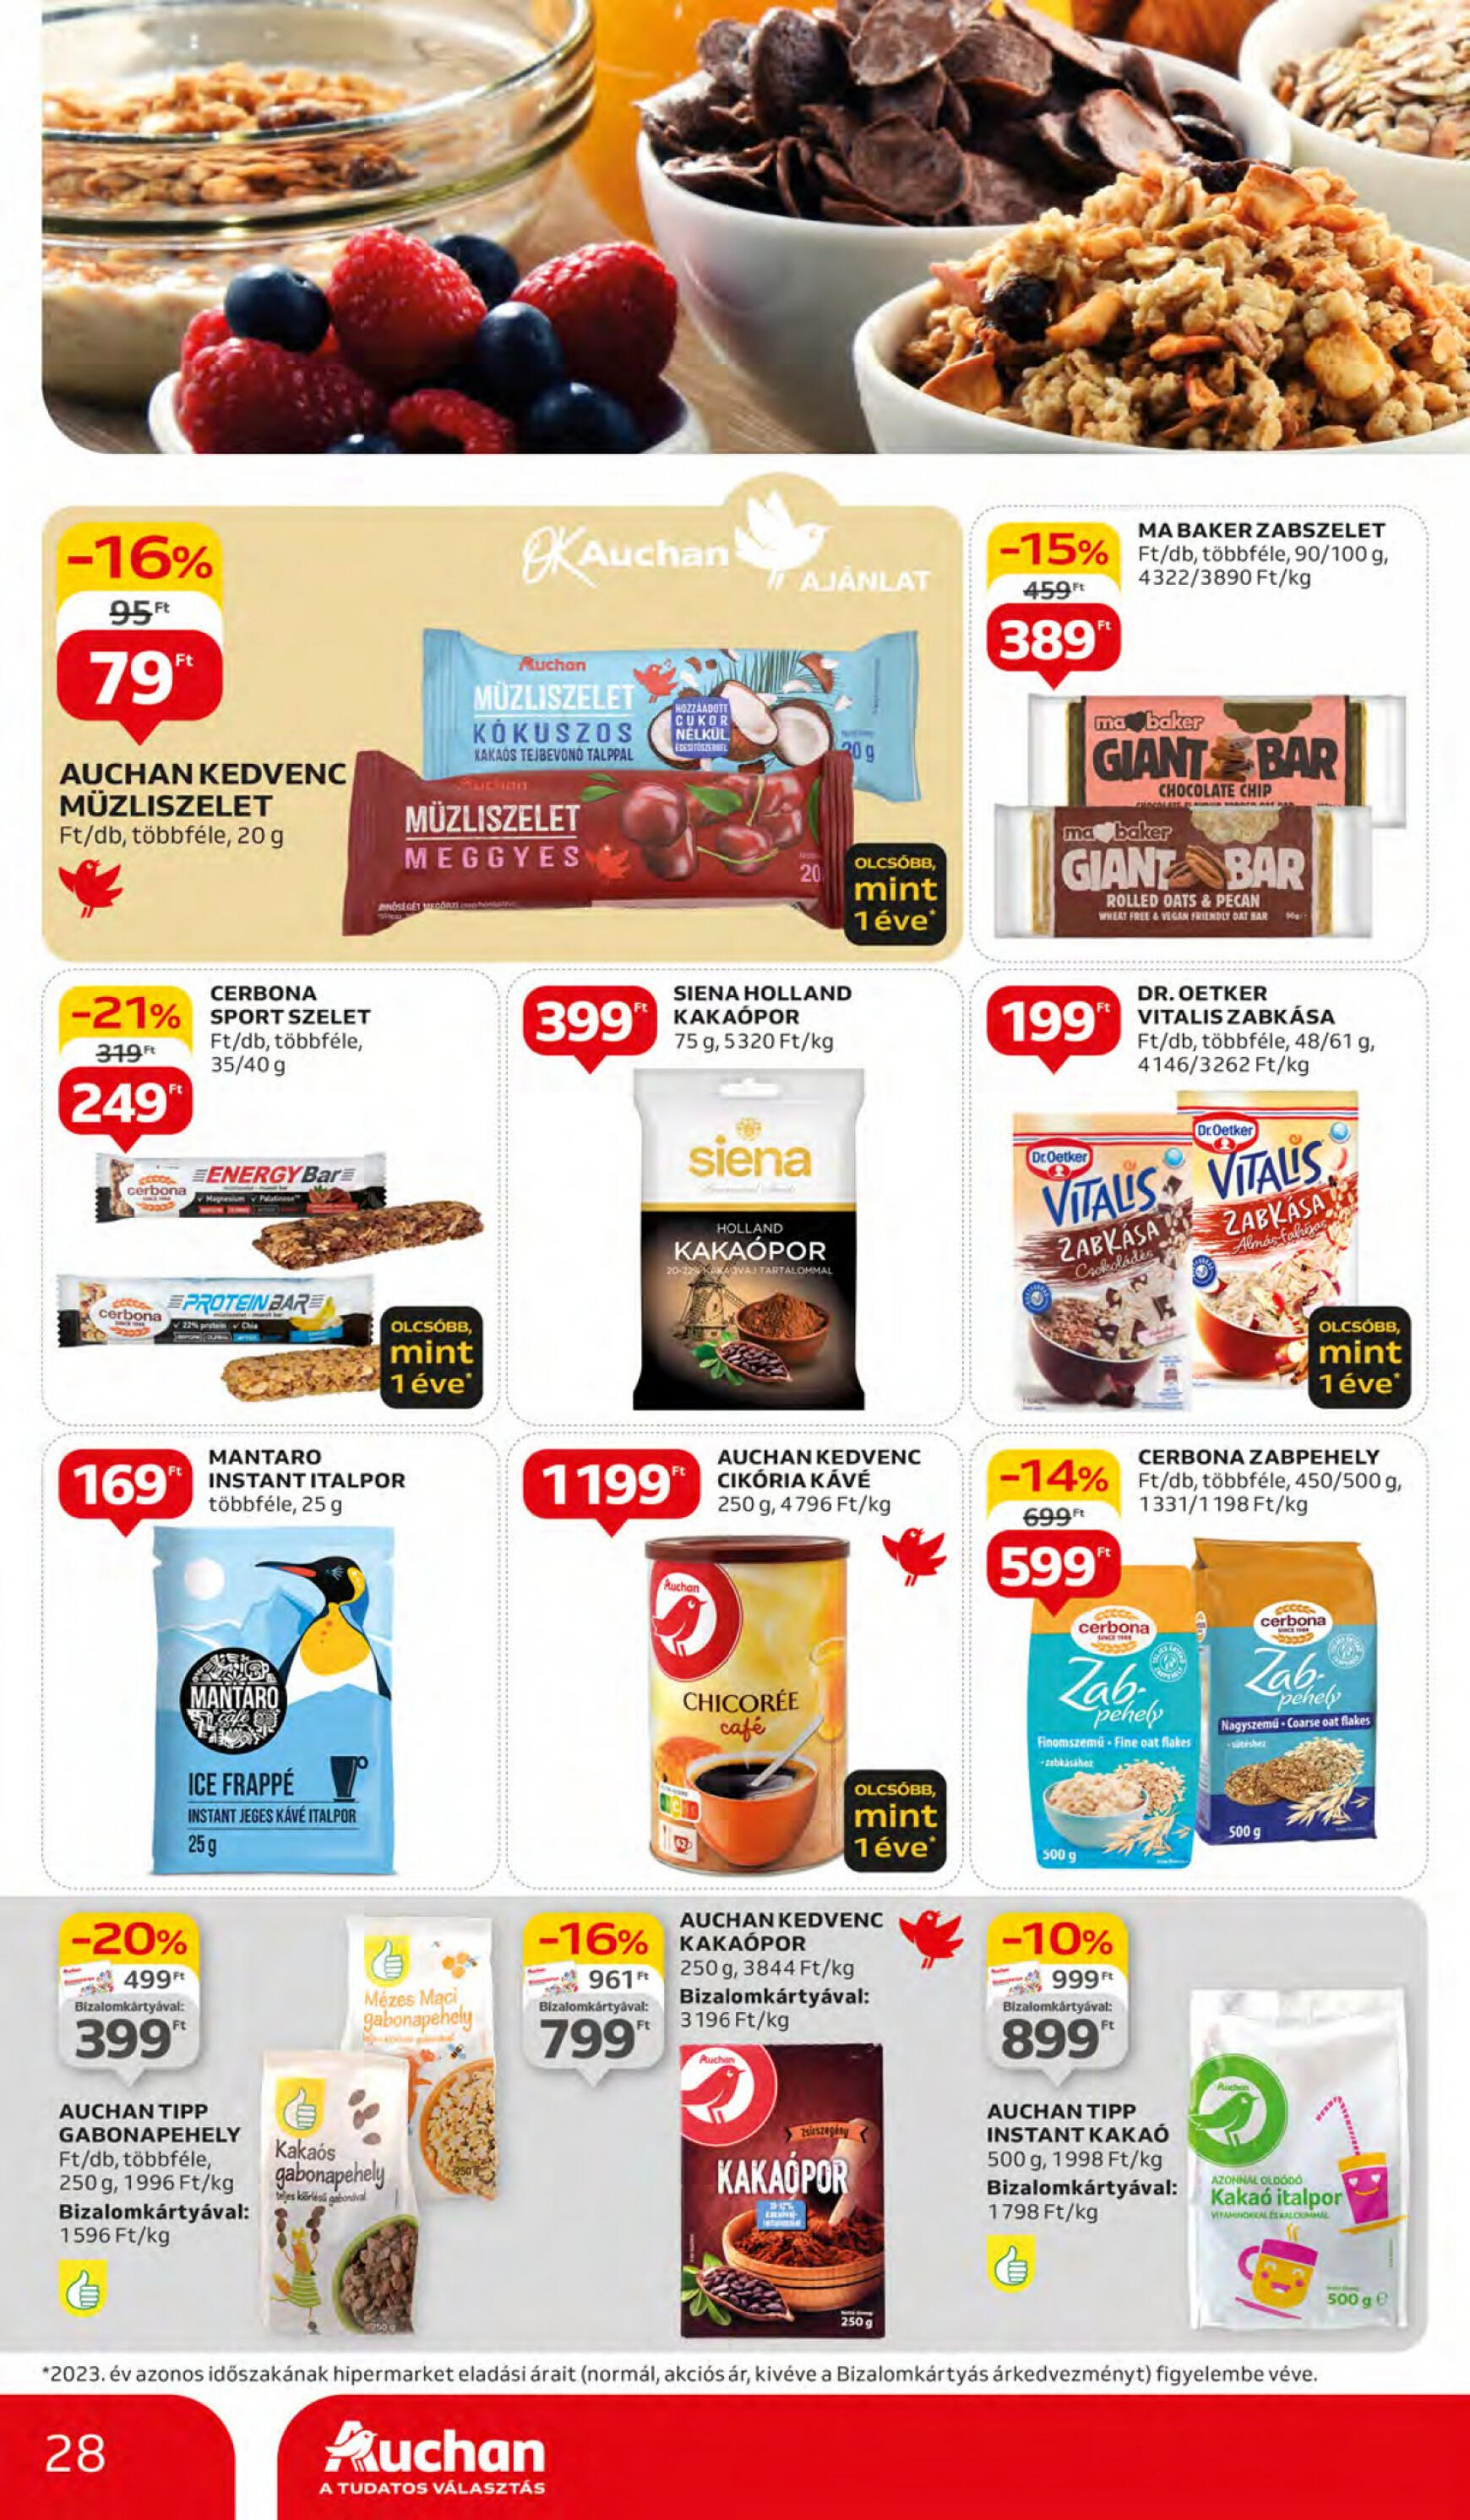 auchan - Aktuális újság Auchan 04.11. - 04.17. - page: 28